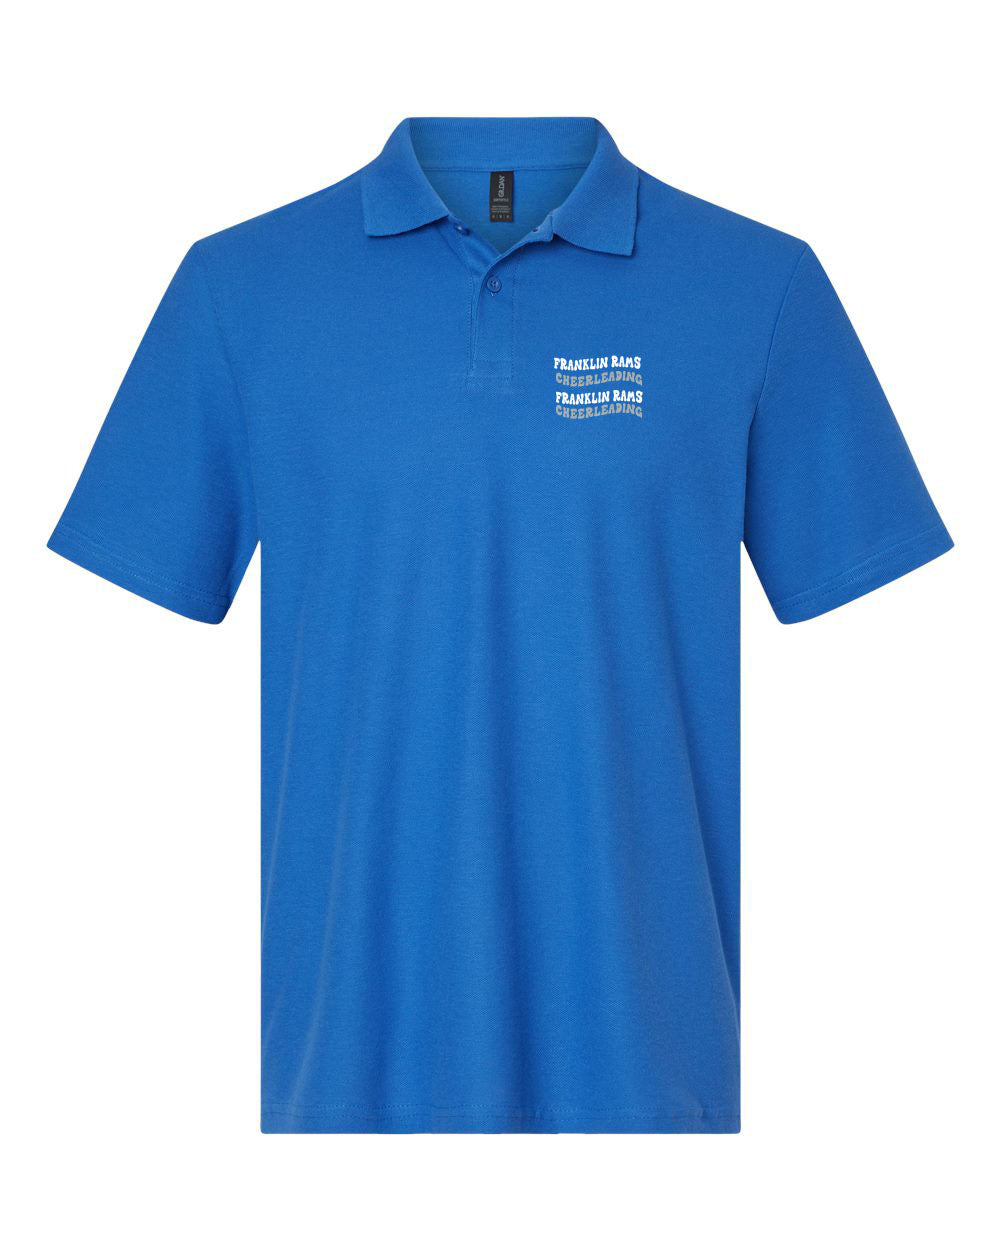 Franklin Cheer Polo T-Shirt Design 1